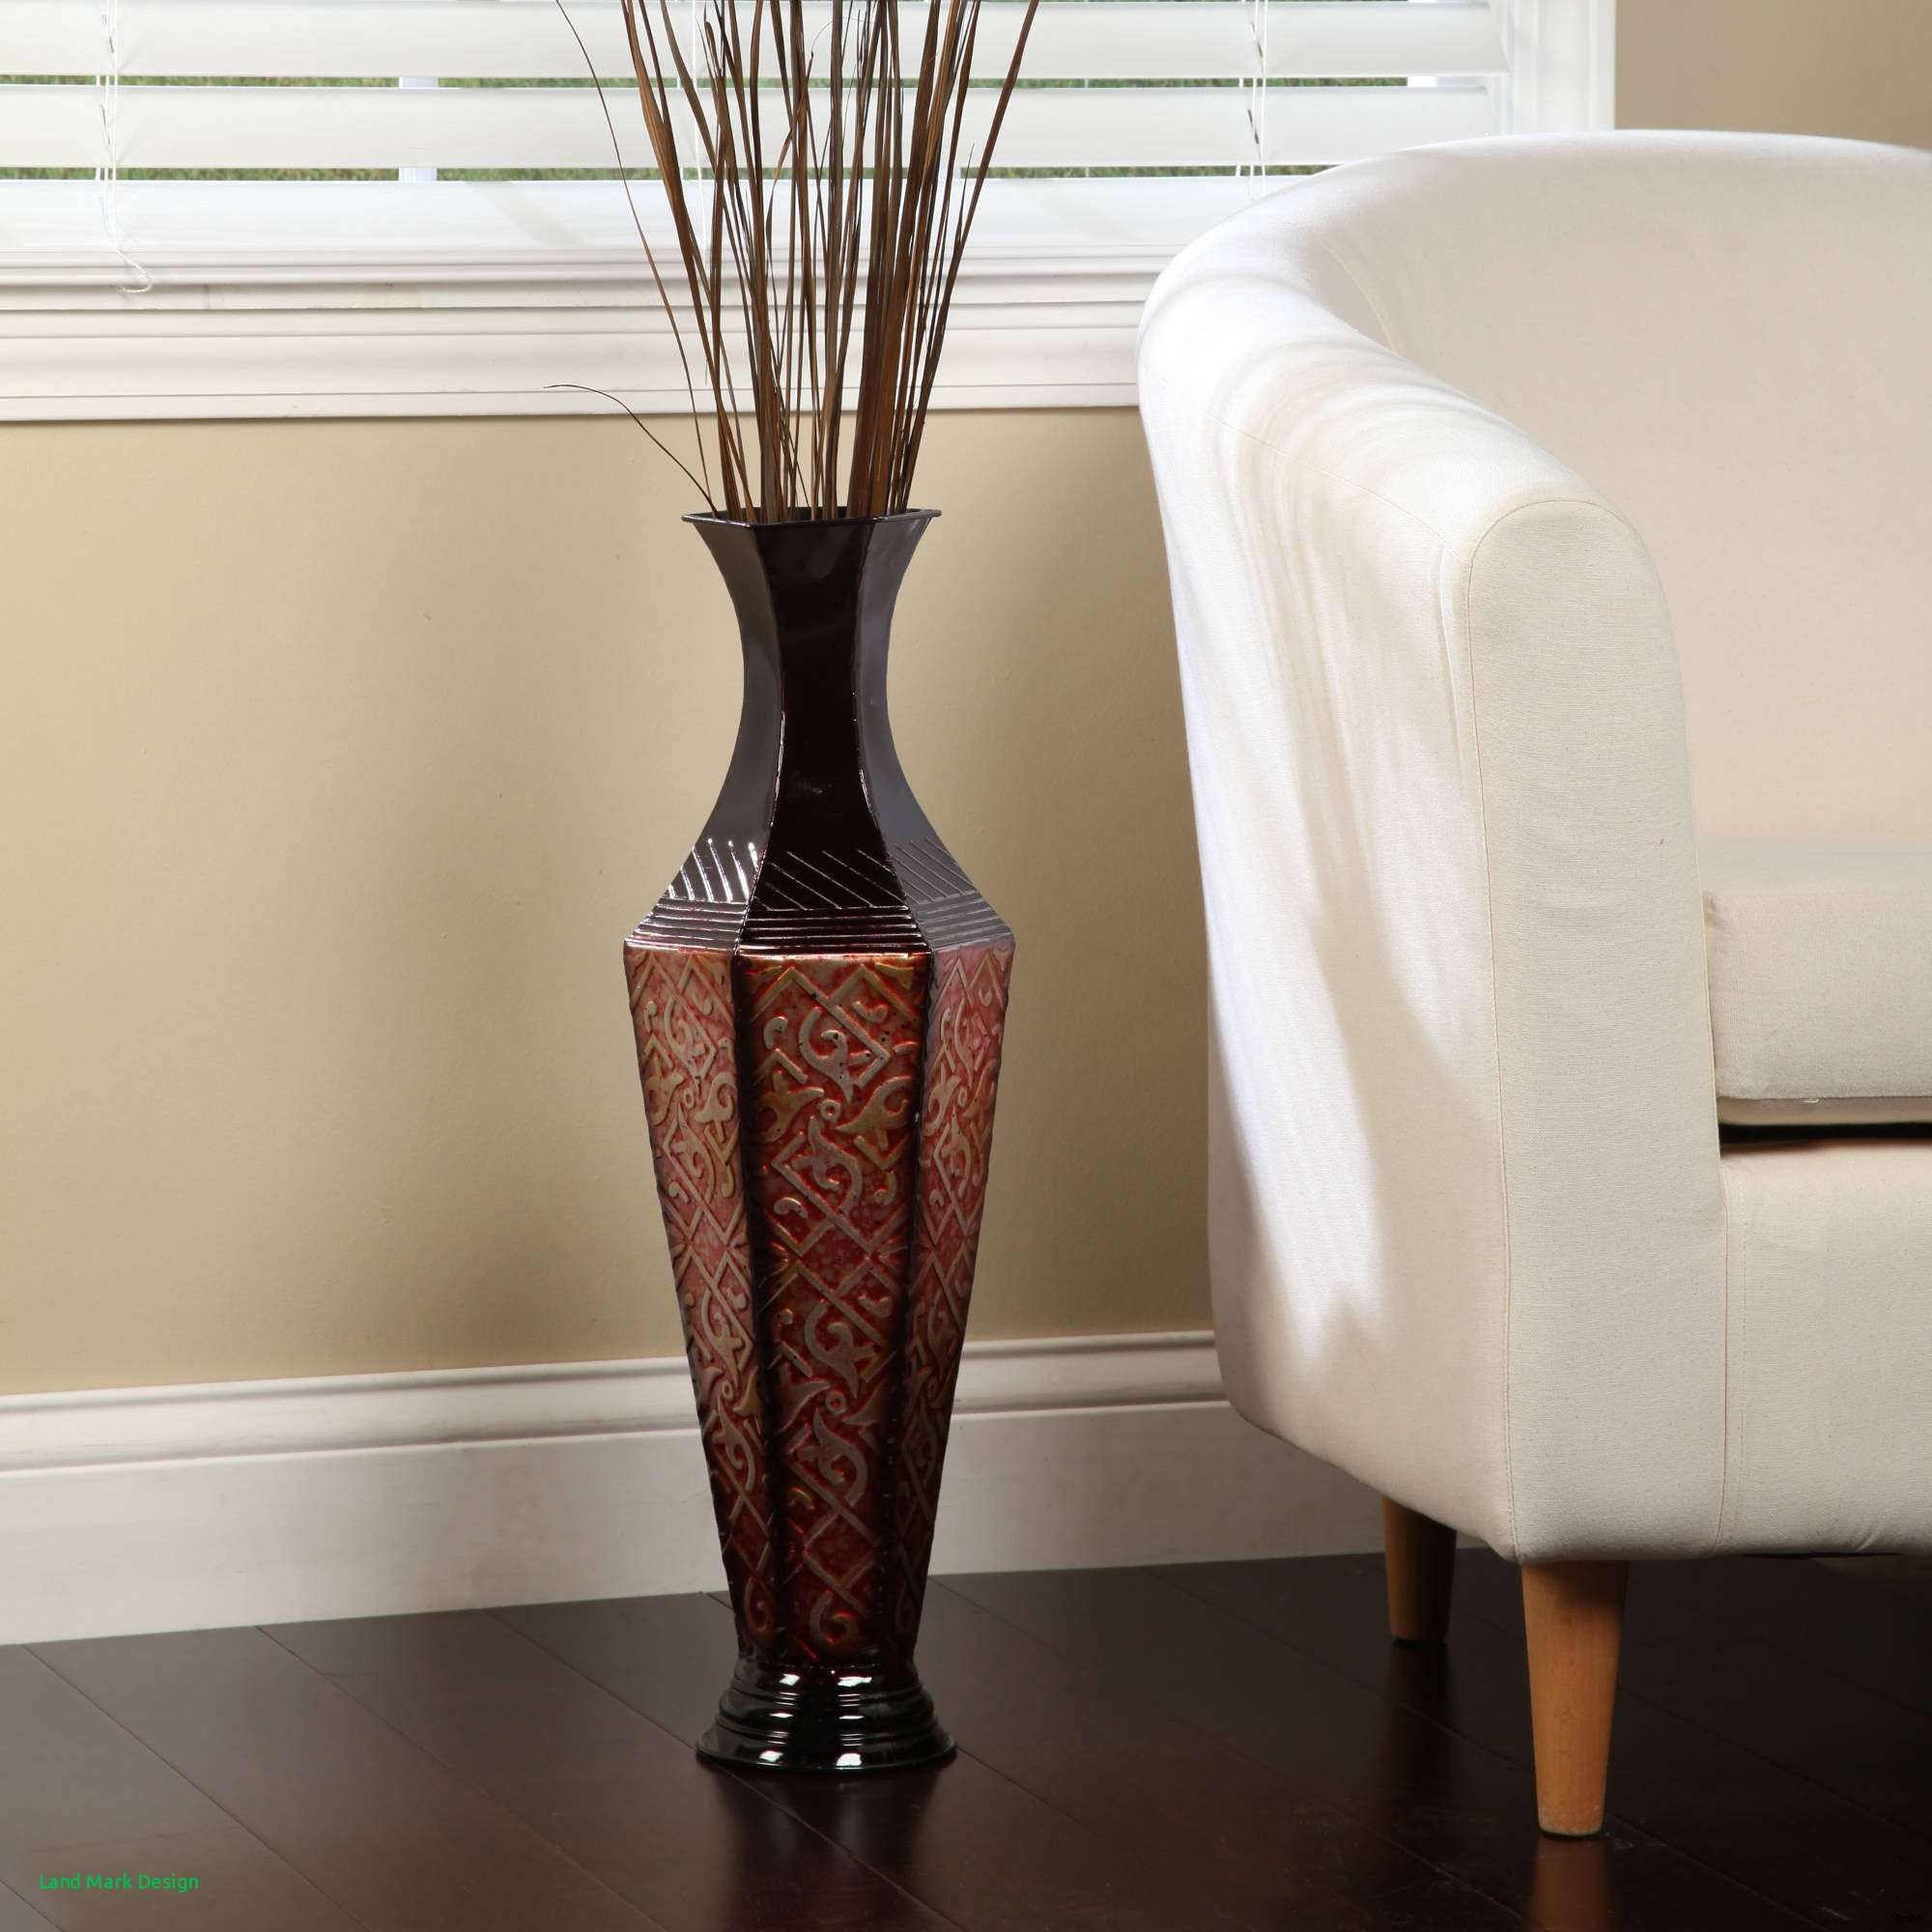 21 Lovable Extra Large Floor Vases Decorative vase Ideas